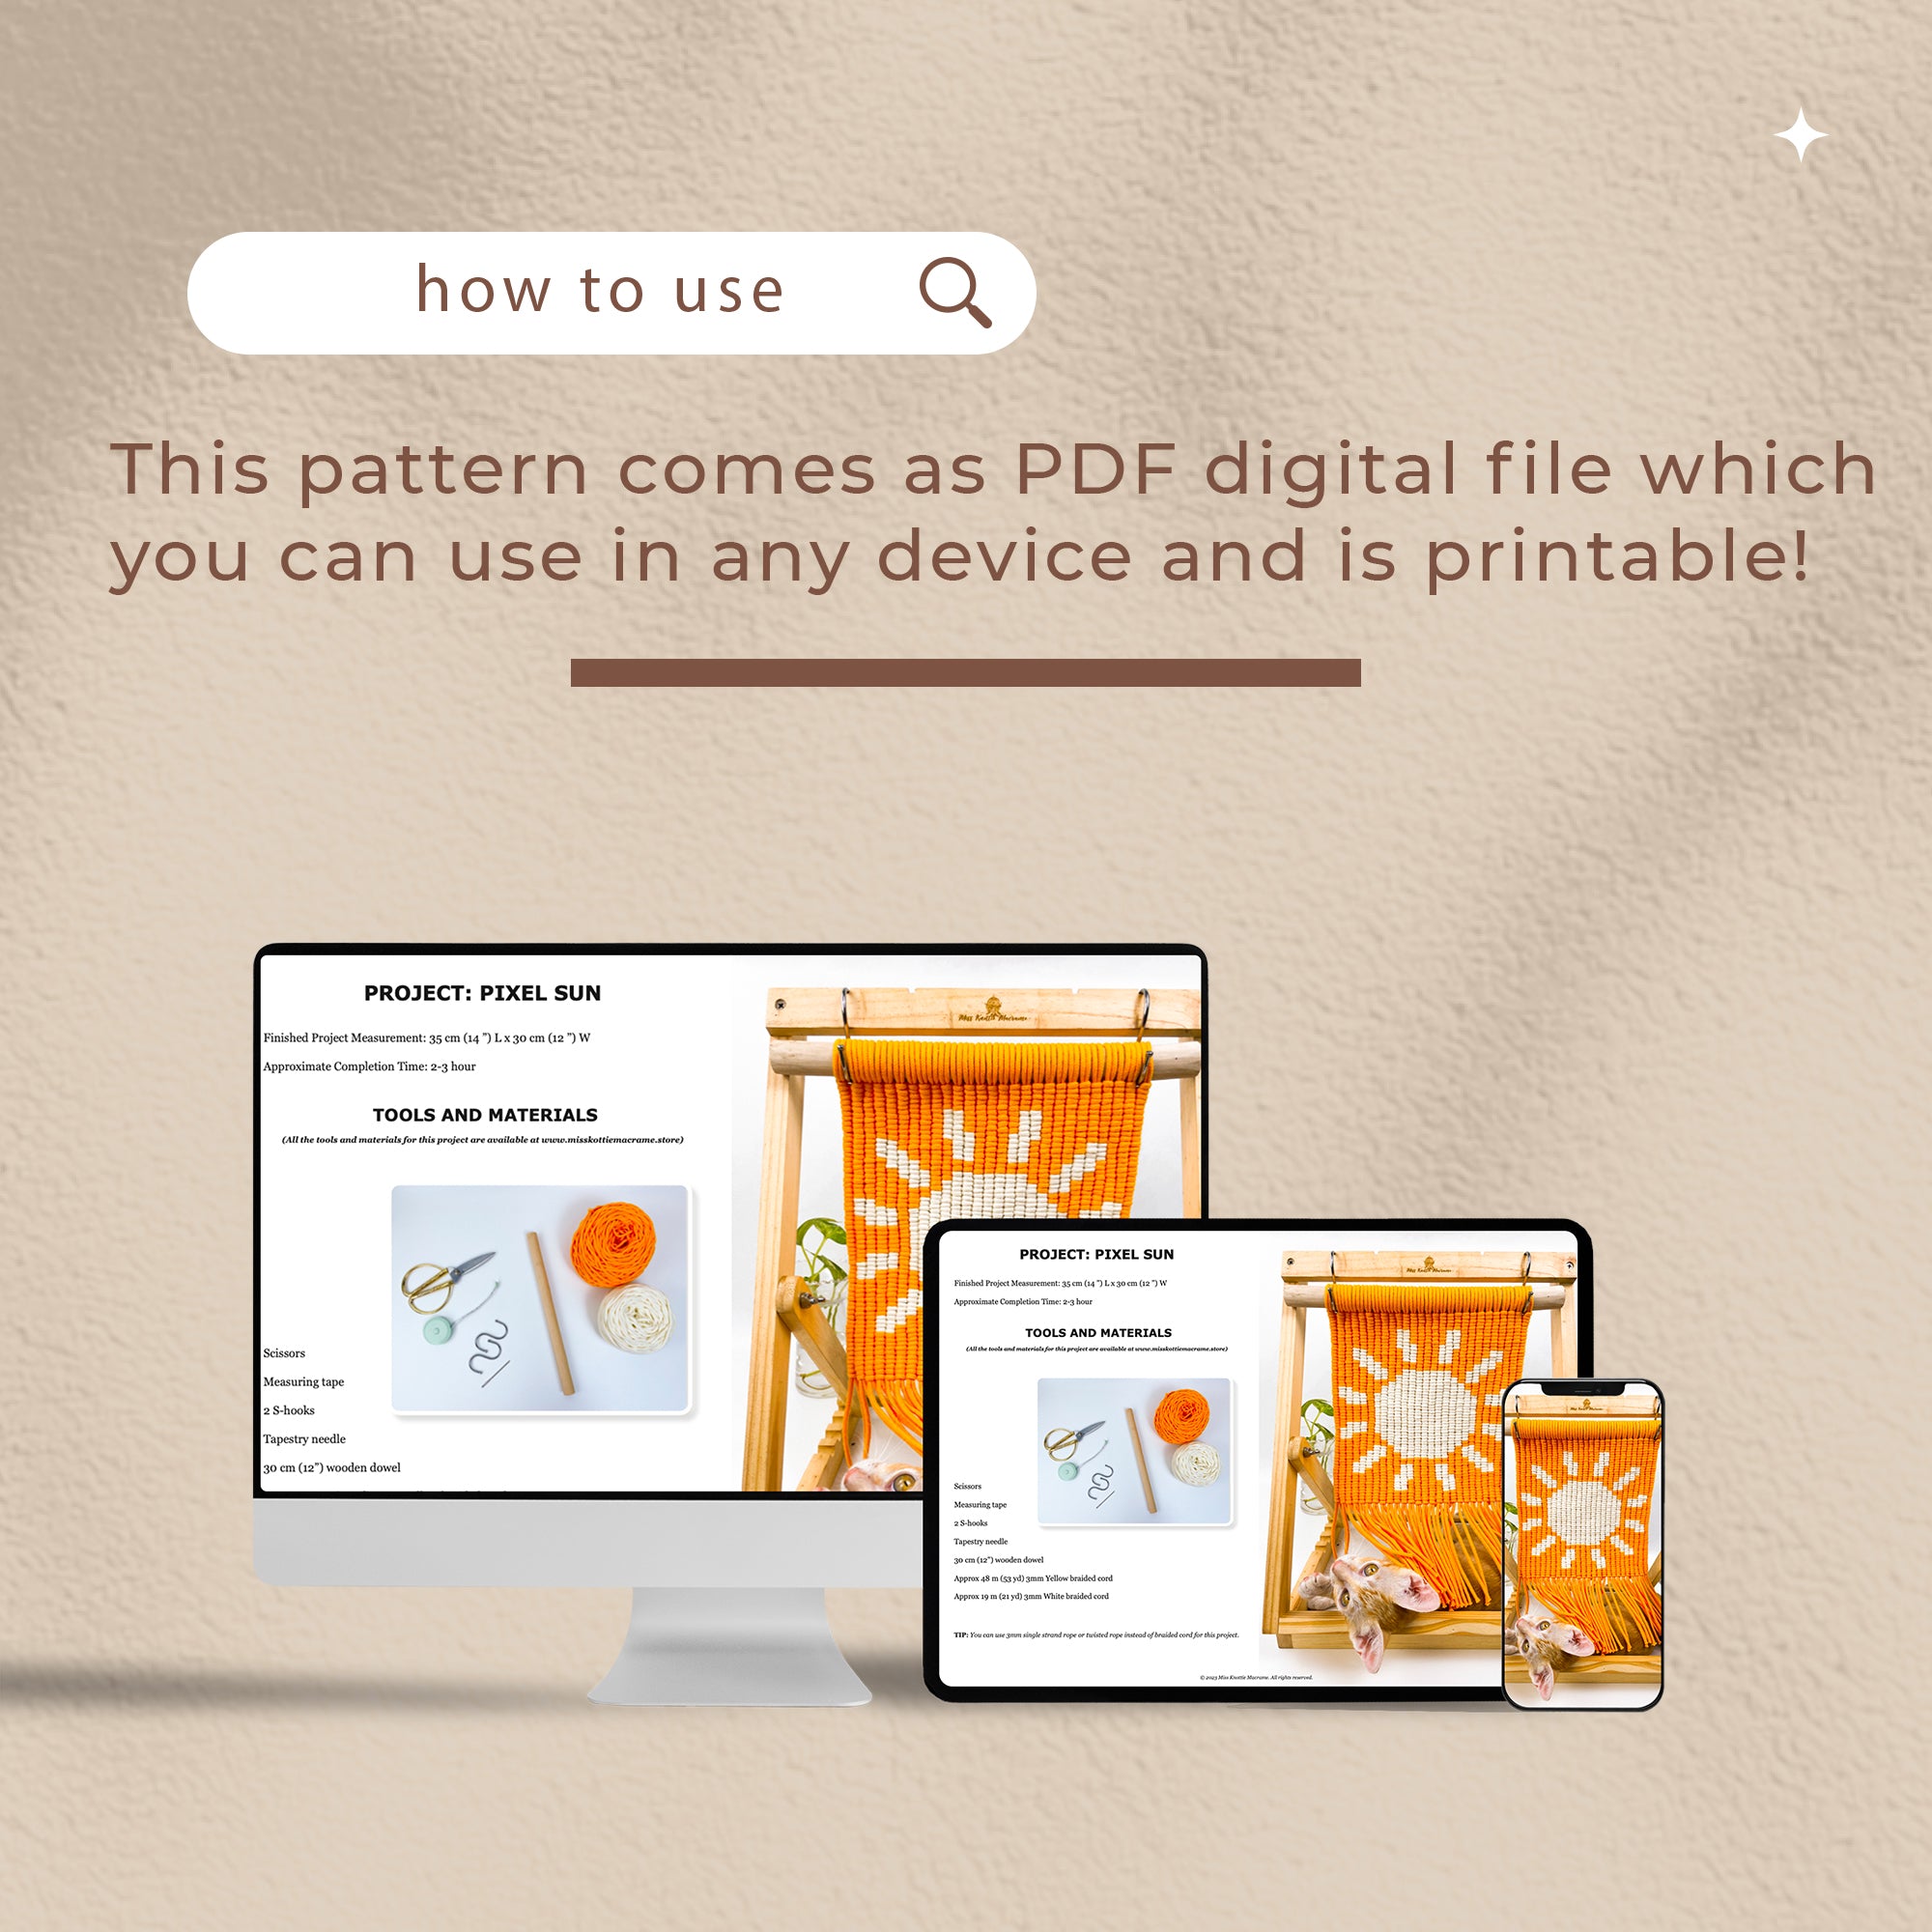 Sun Pixel Art Pattern - Digital PDF and Knot Guide